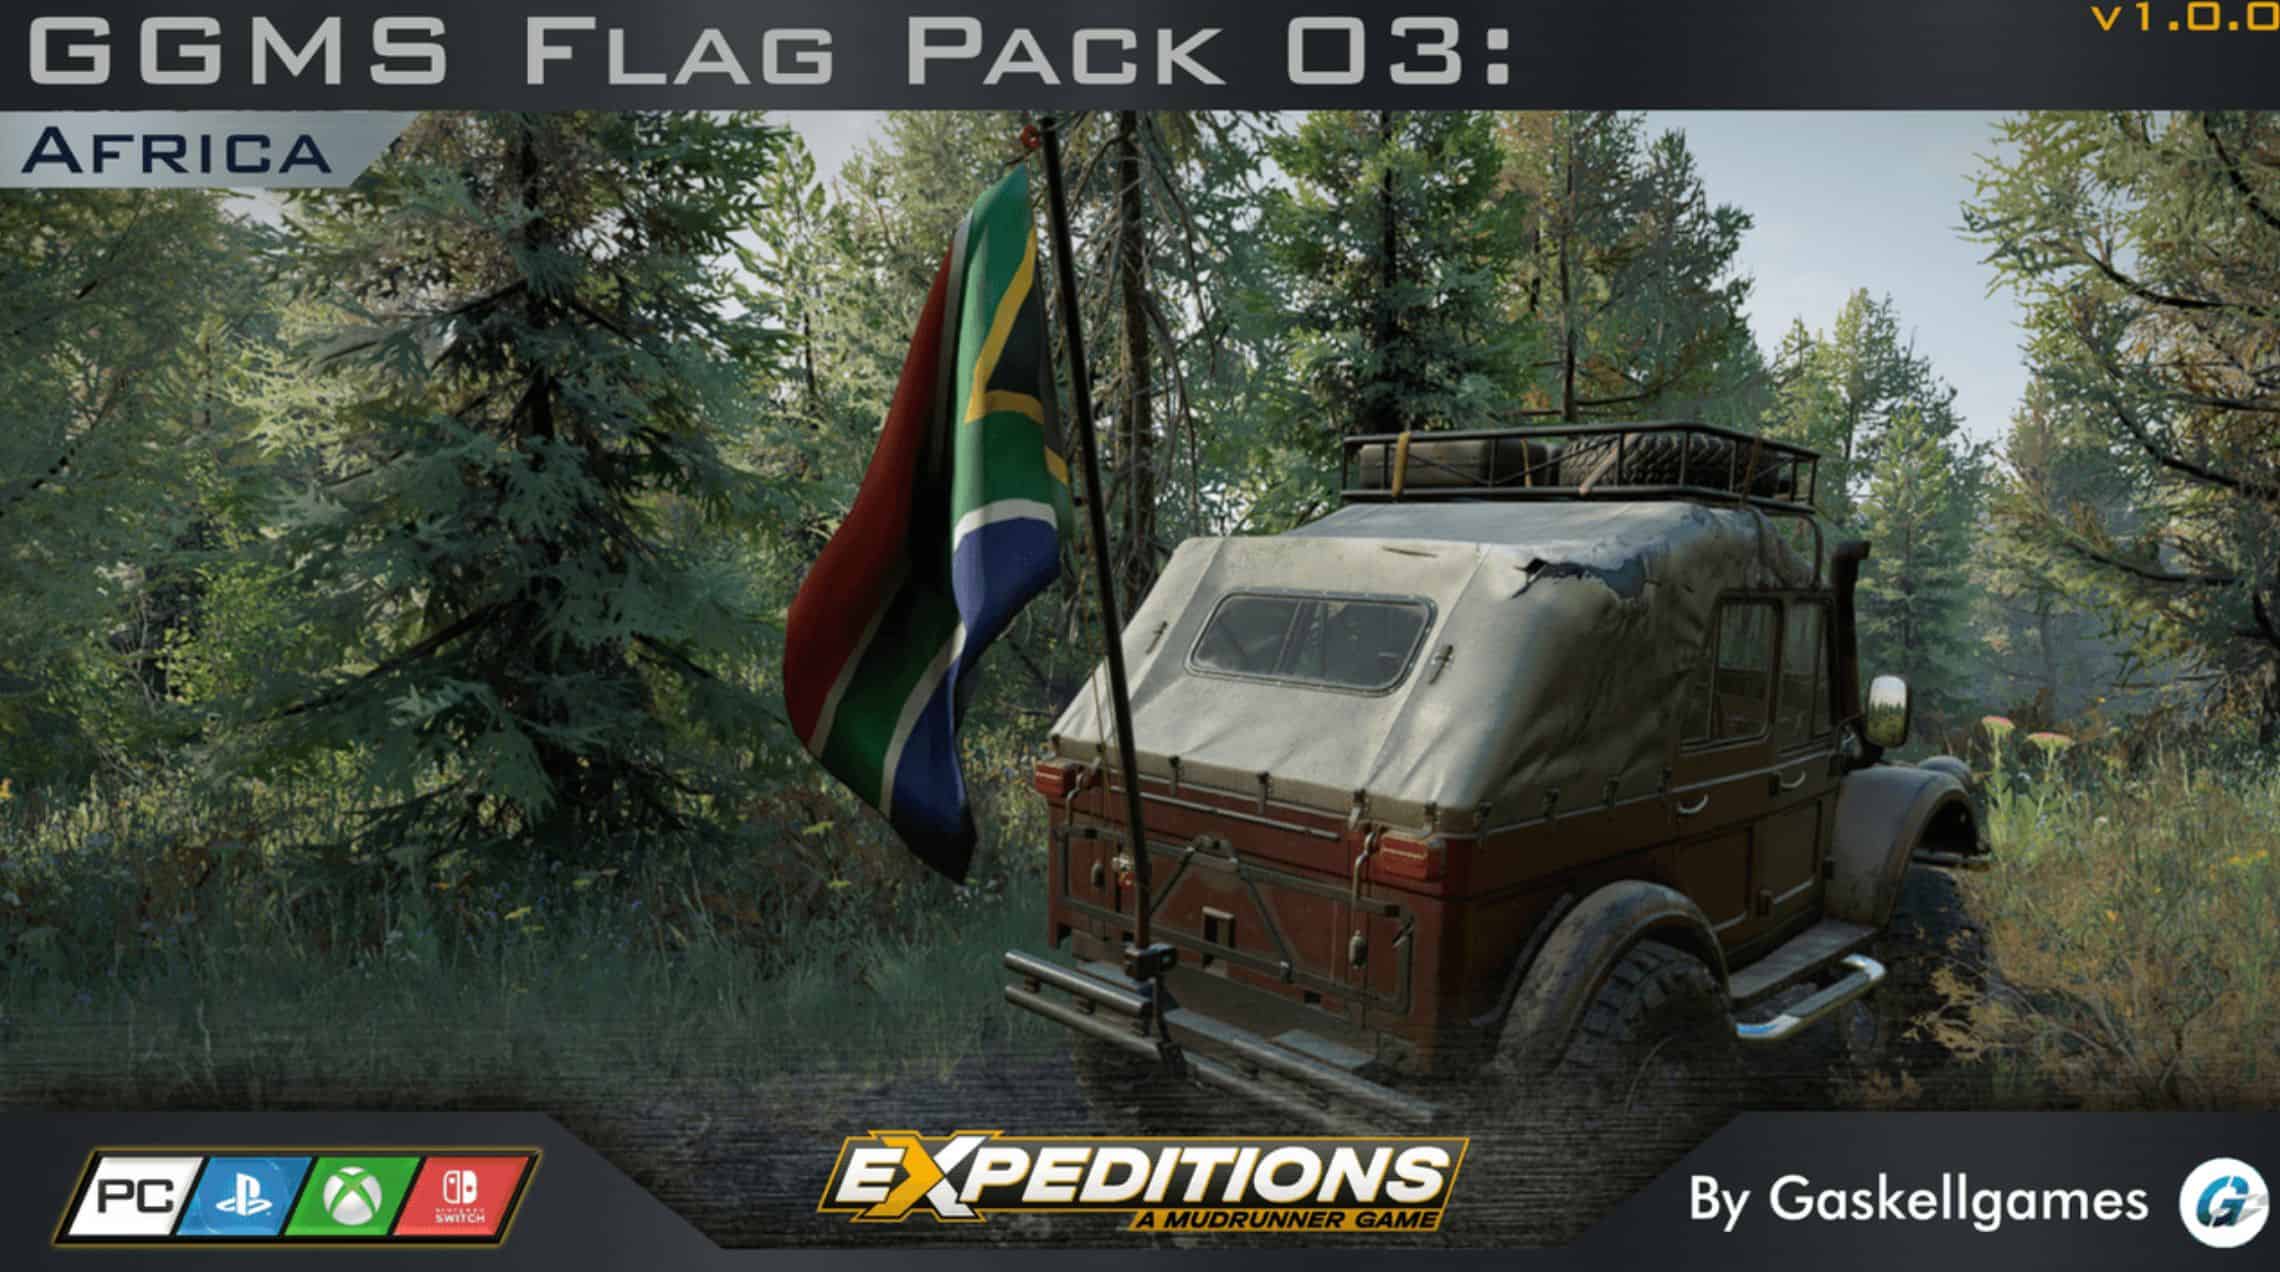 GGMS Flag Pack 03: Africa V1.0